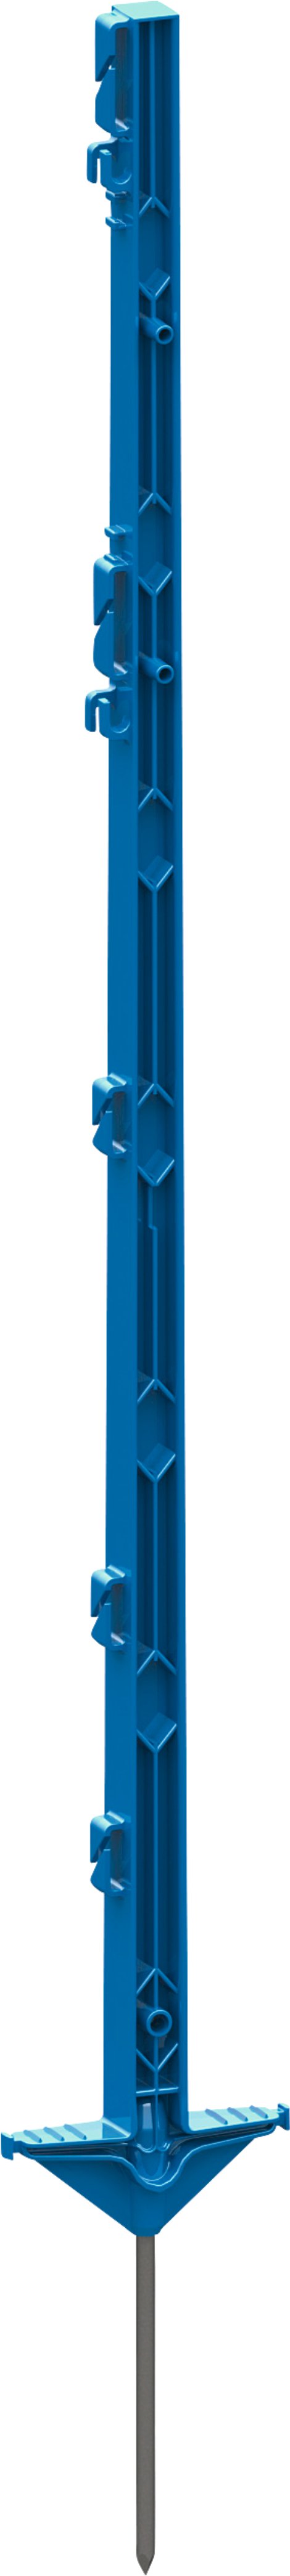 AKO Kunststoffpfahl Classic mit Doppeltritt, blau 105 cm